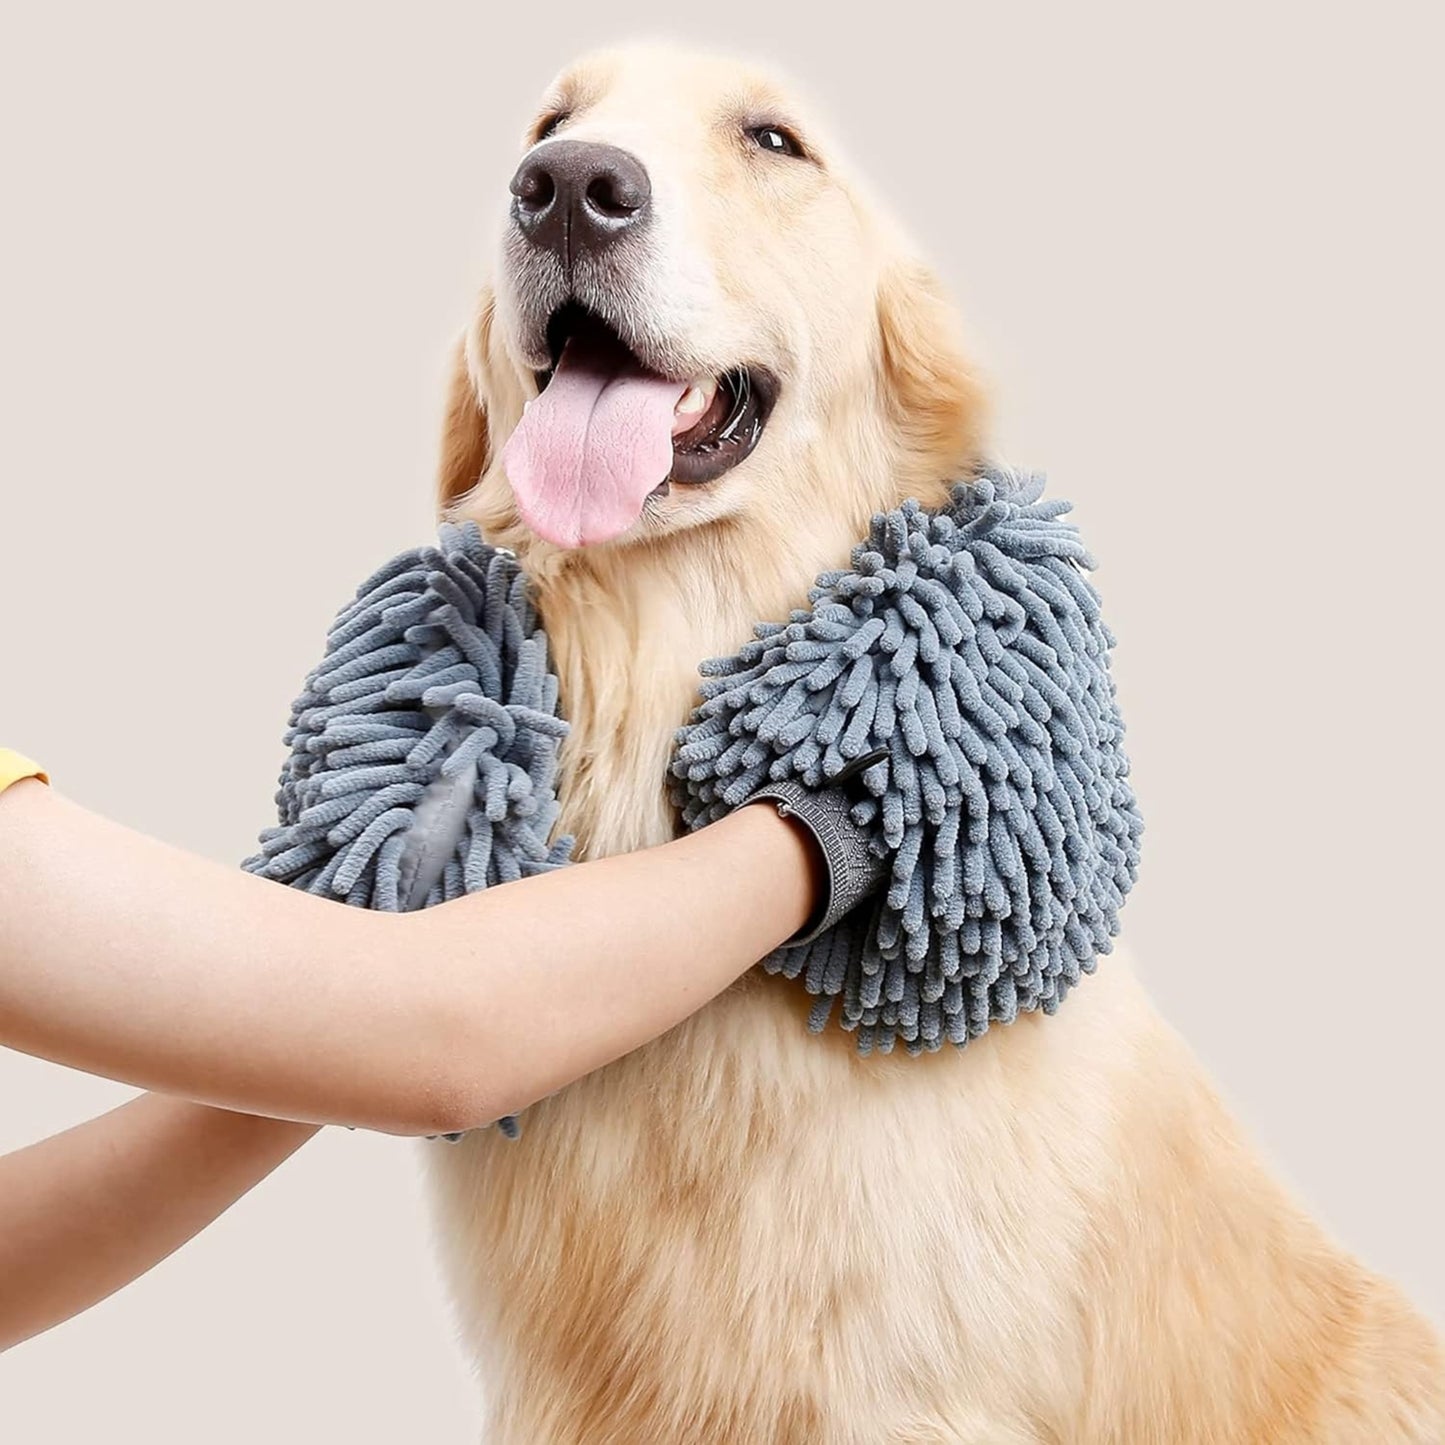 Foodie Puppies Ultra-Absorbant Chenille Microfiber Pet Towel Glove